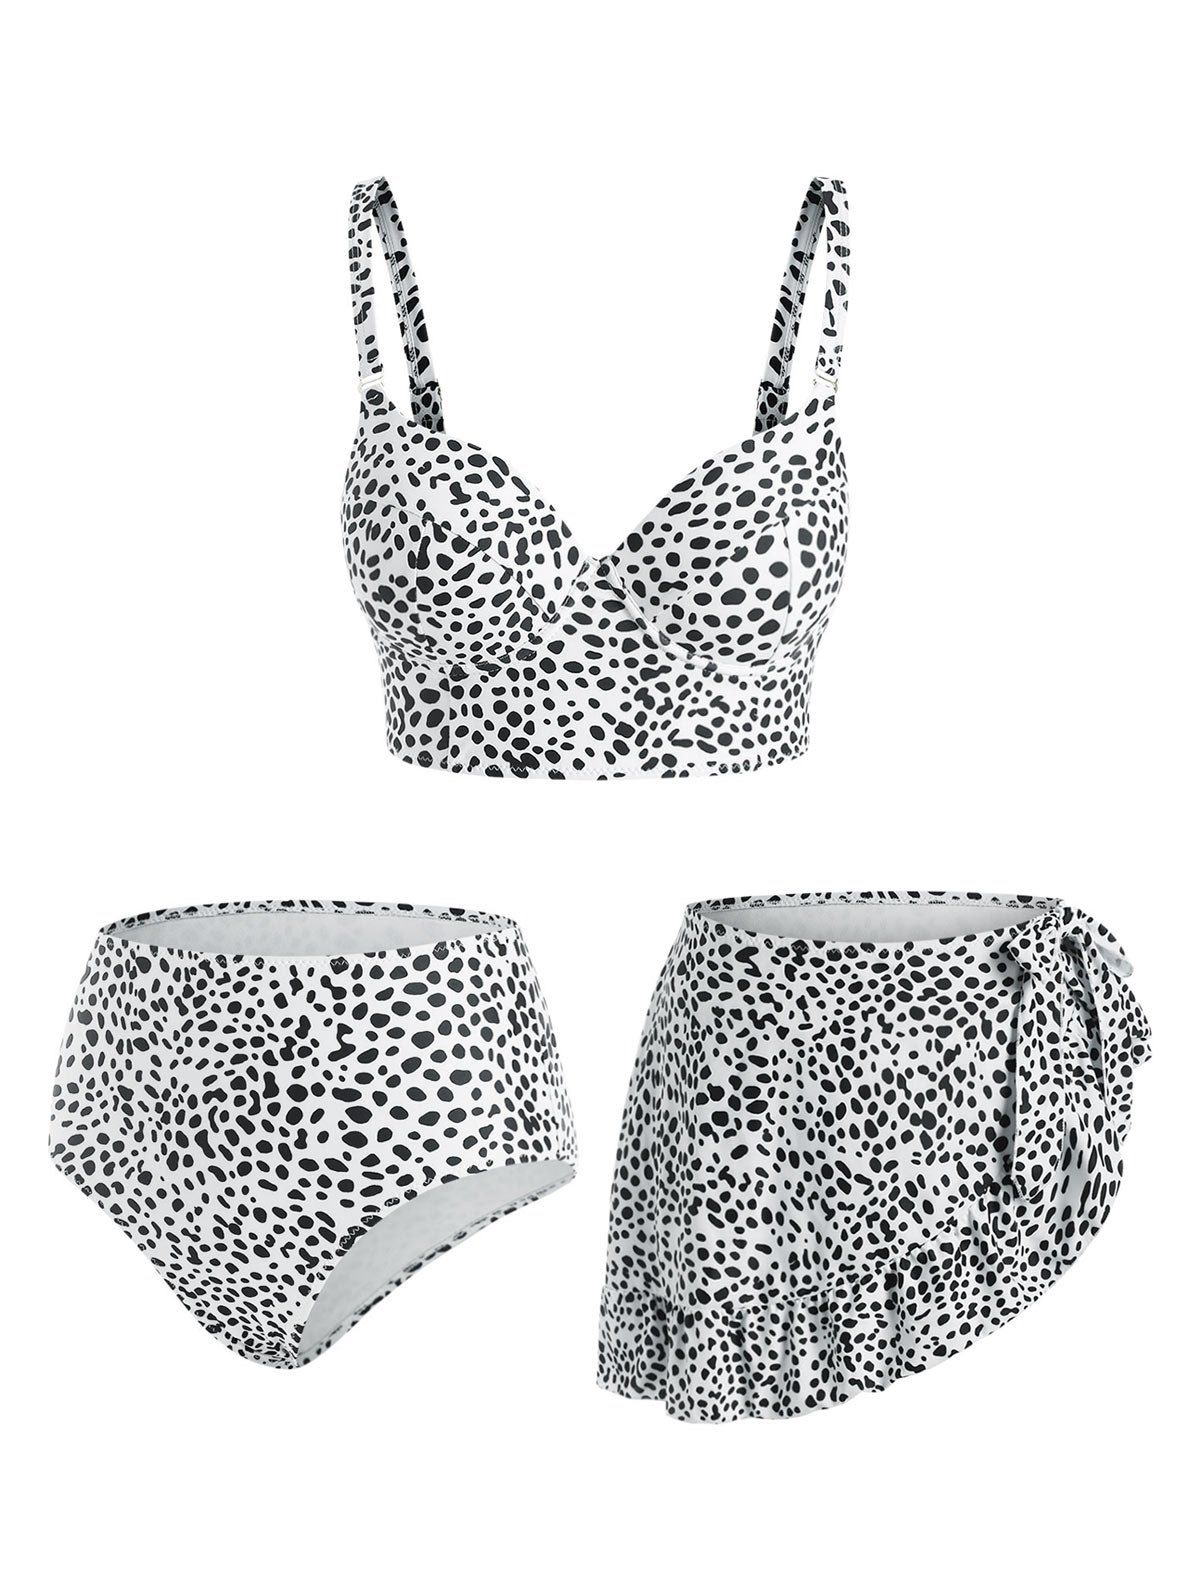 Beach Swimsuit Dalmatian Animal Print Bathing Suit Ruffle Tie Push Up Three Piece Tankini Swimwear - BLACK S